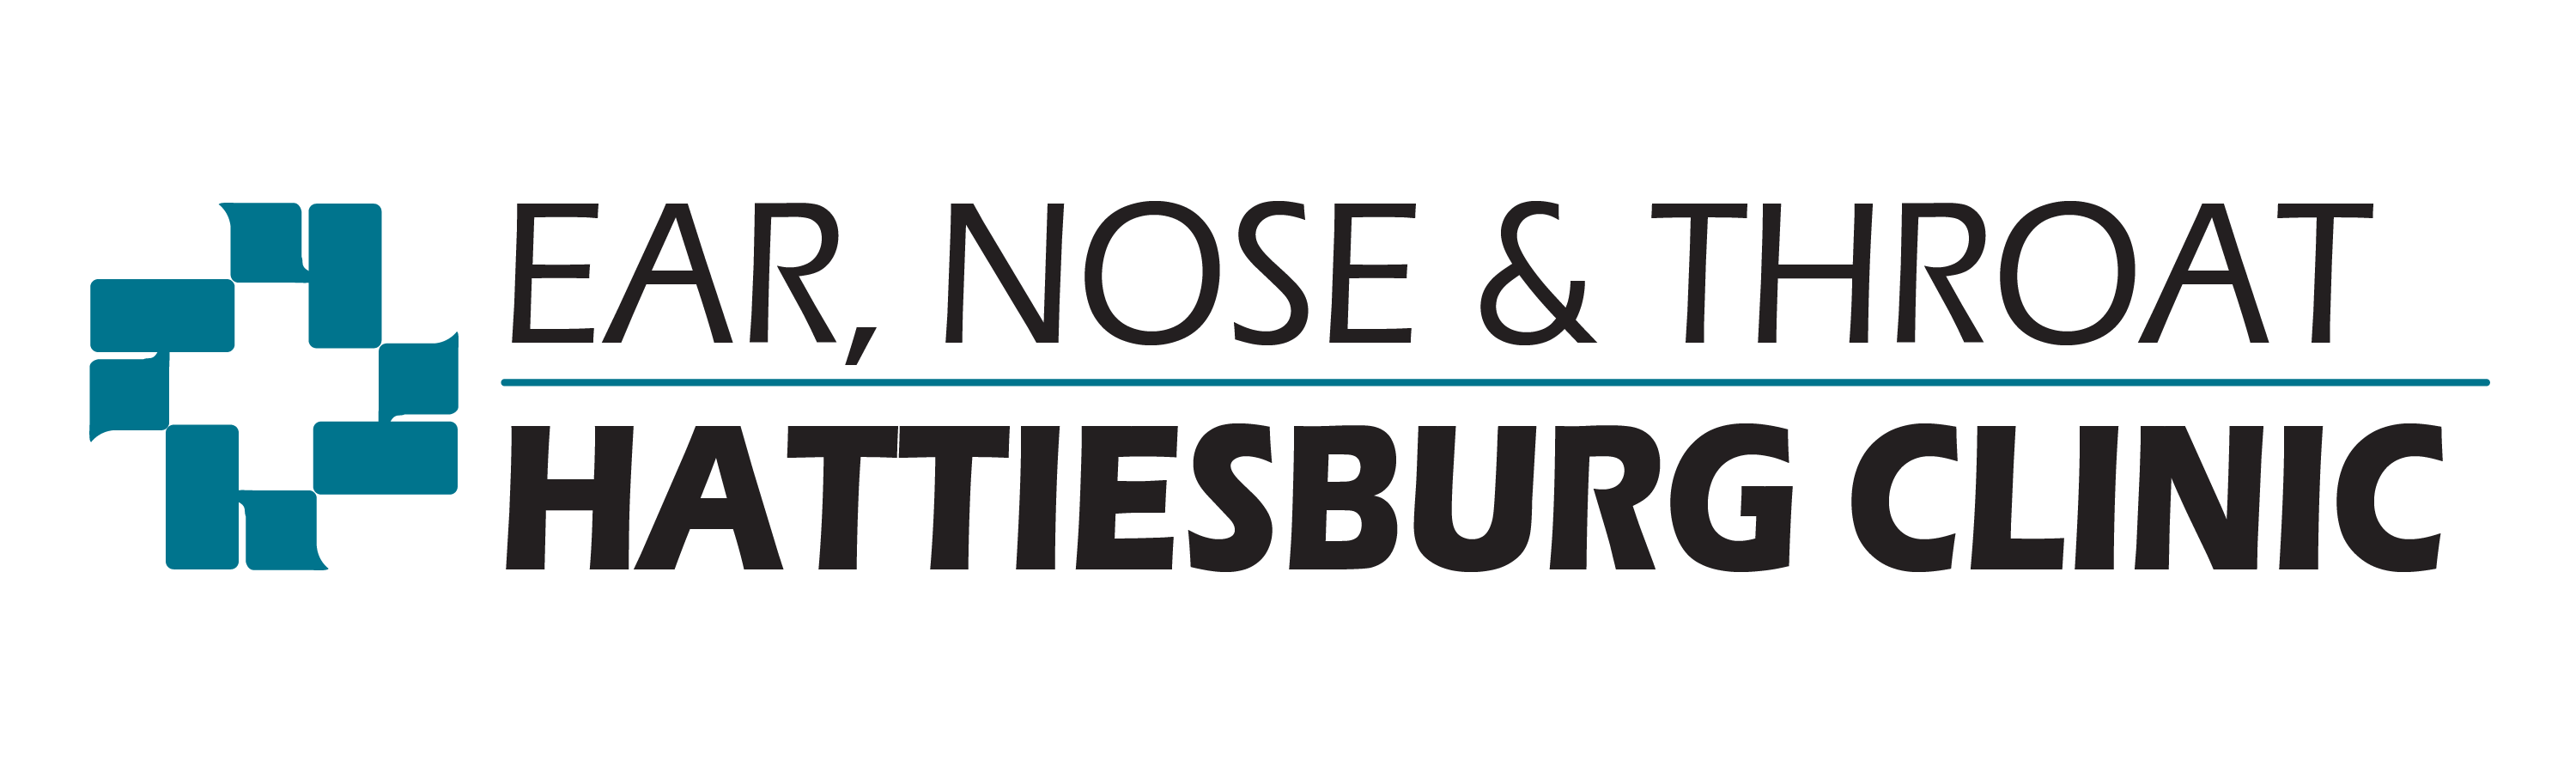 Ear, Nose & Throat logo